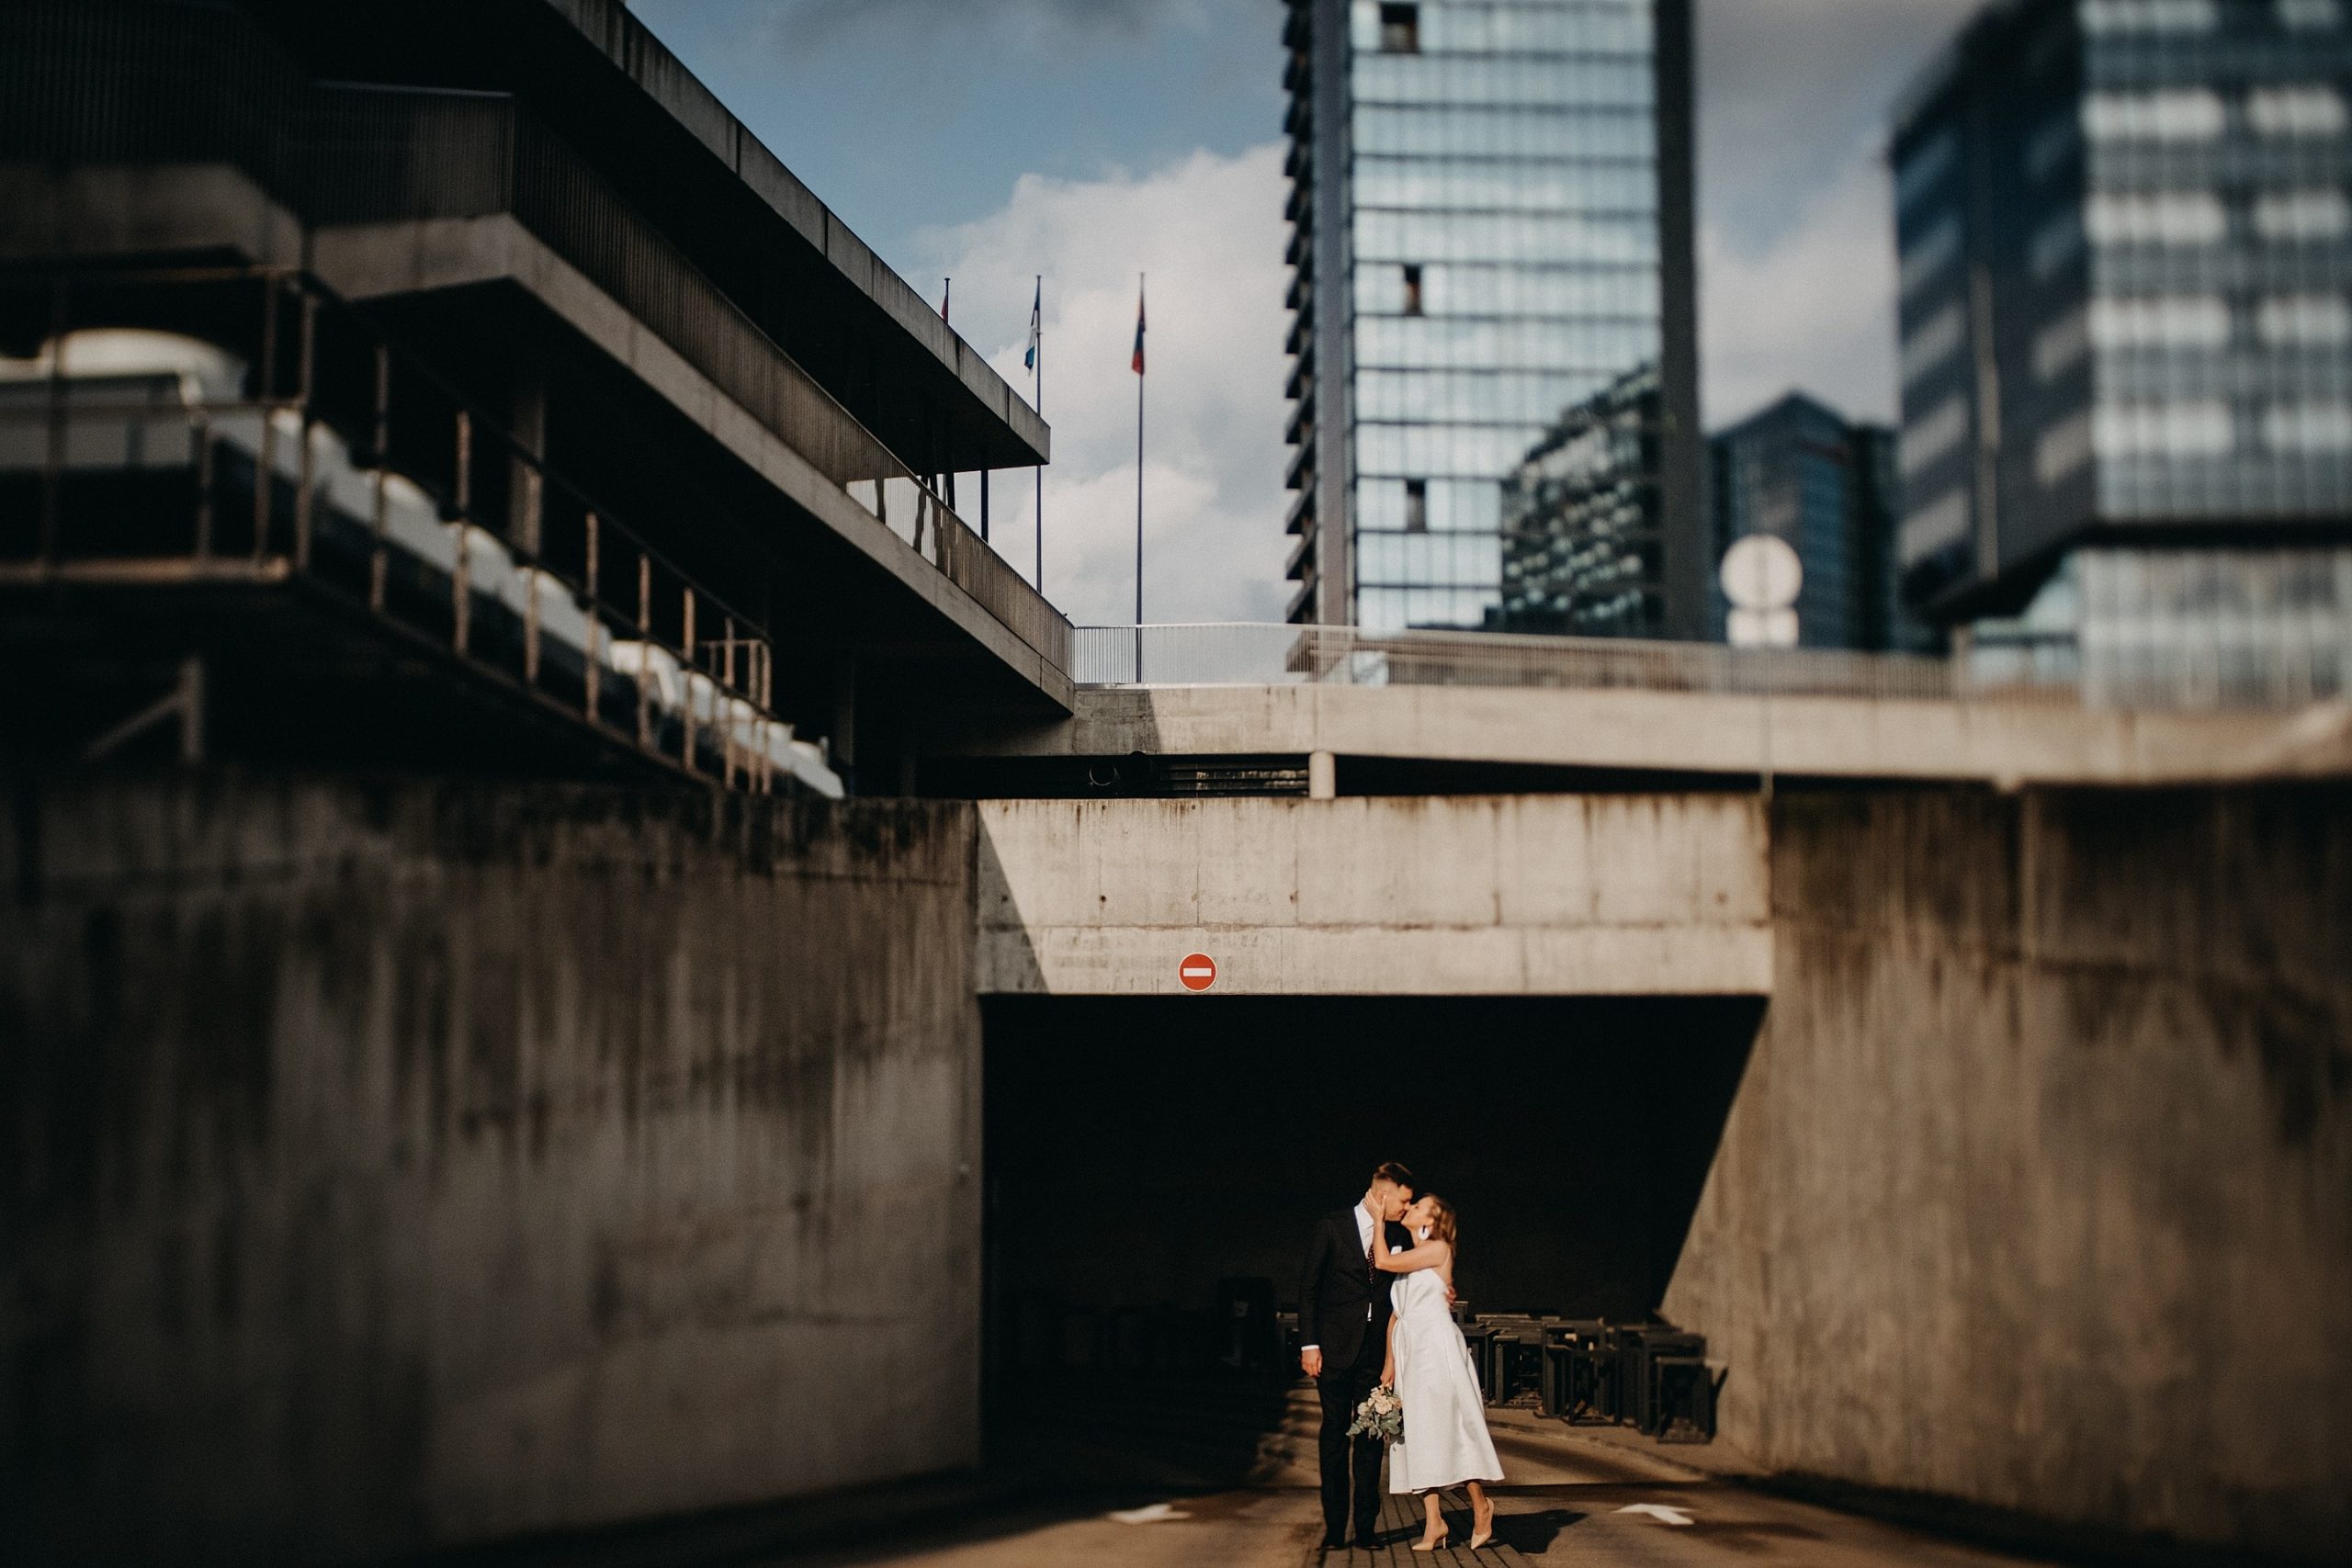 Vestuvės fotografas miestas vilniues pastatai dangoraižiai pora suknelė kostiumas menas art